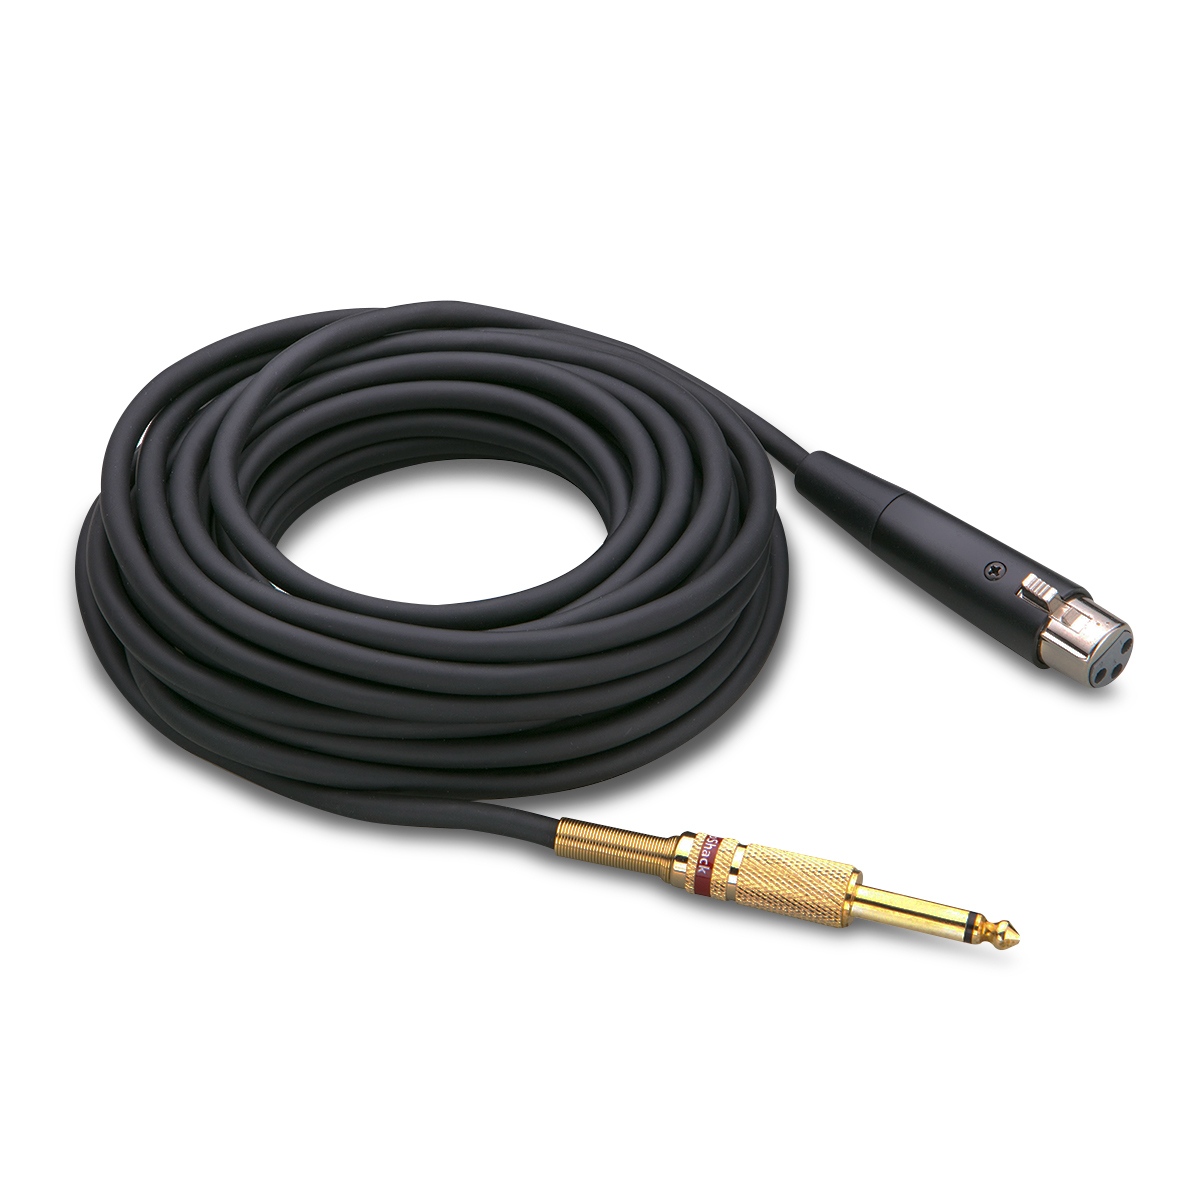 Cable Auxiliar Plug 3.5mm 1.5m Cable Para Microfono o Bocina Cable de Audio  Plug